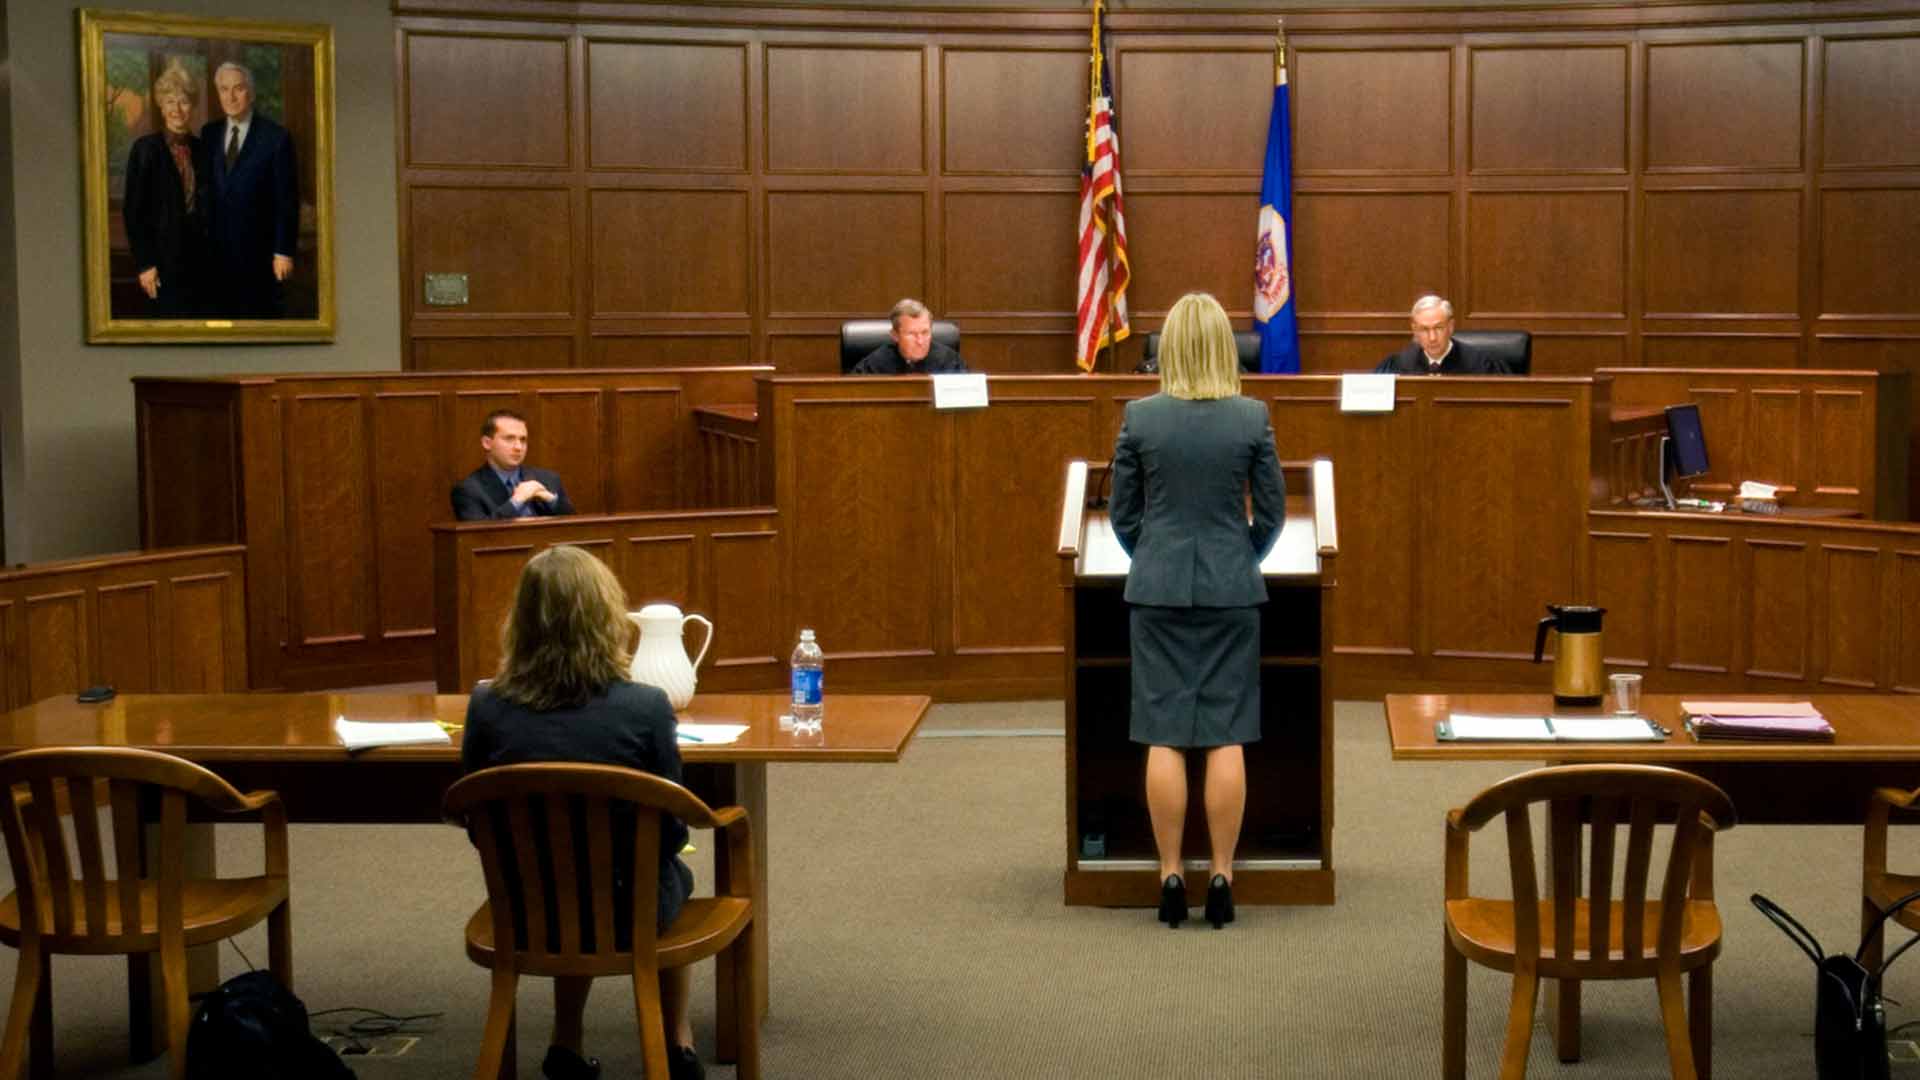 Student addresses judges